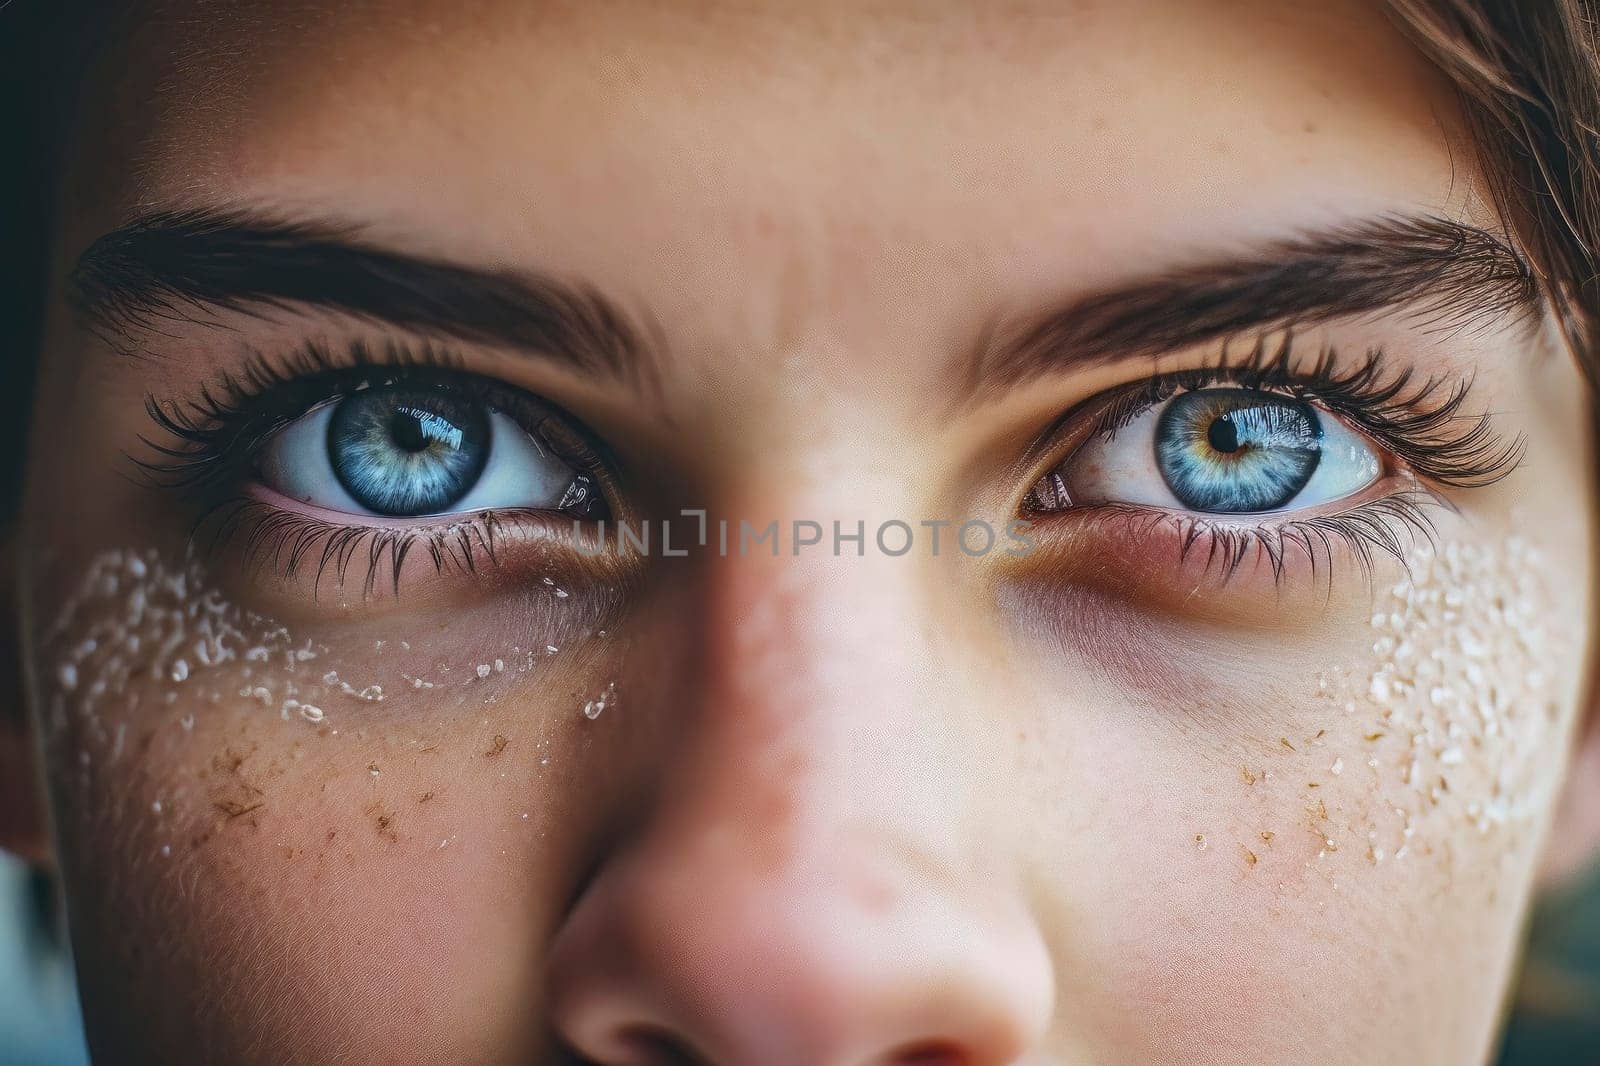 Mesmerizing close-up shot capturing the captivating beauty of a girl's striking blue eyes.